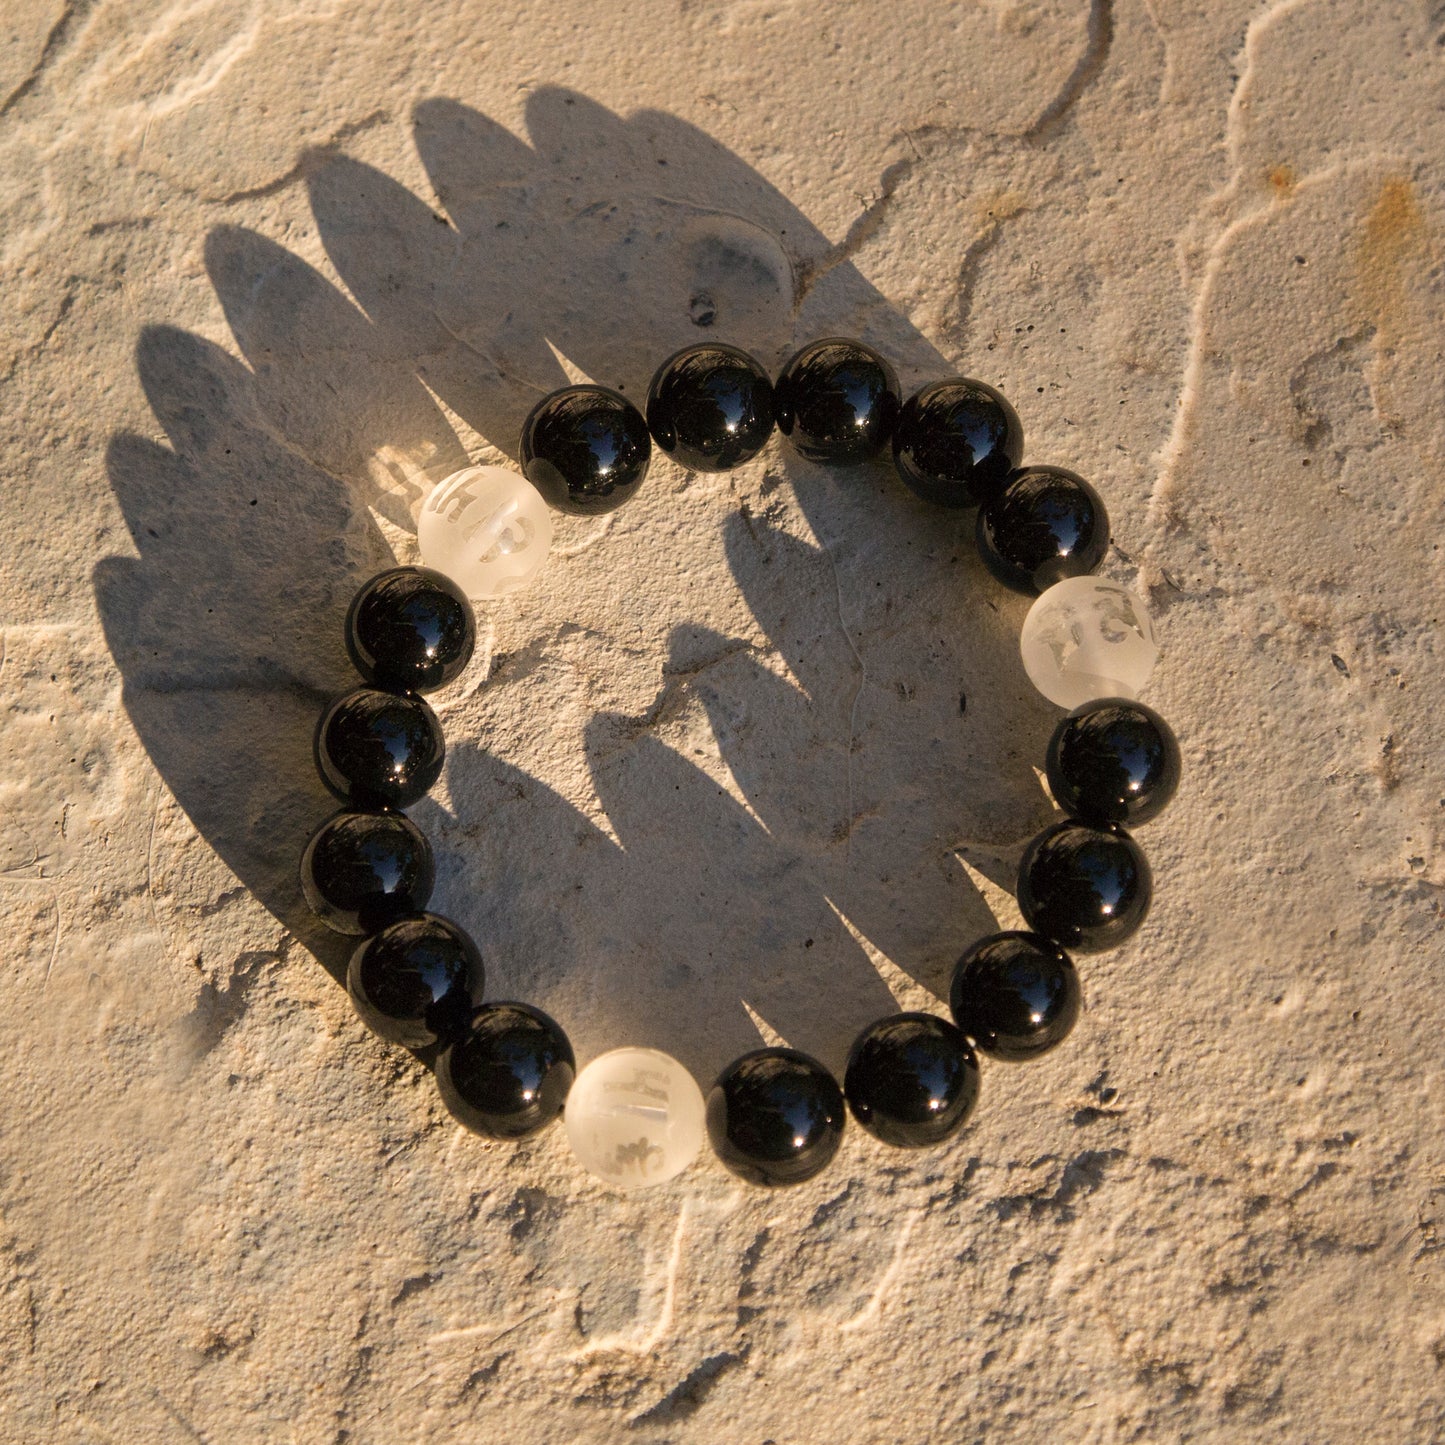 Black and White Tibetan Buddhist Prayers Symbols Beaded Bracelet, Black Onyx and Quartz Mala - ZentralDesigns